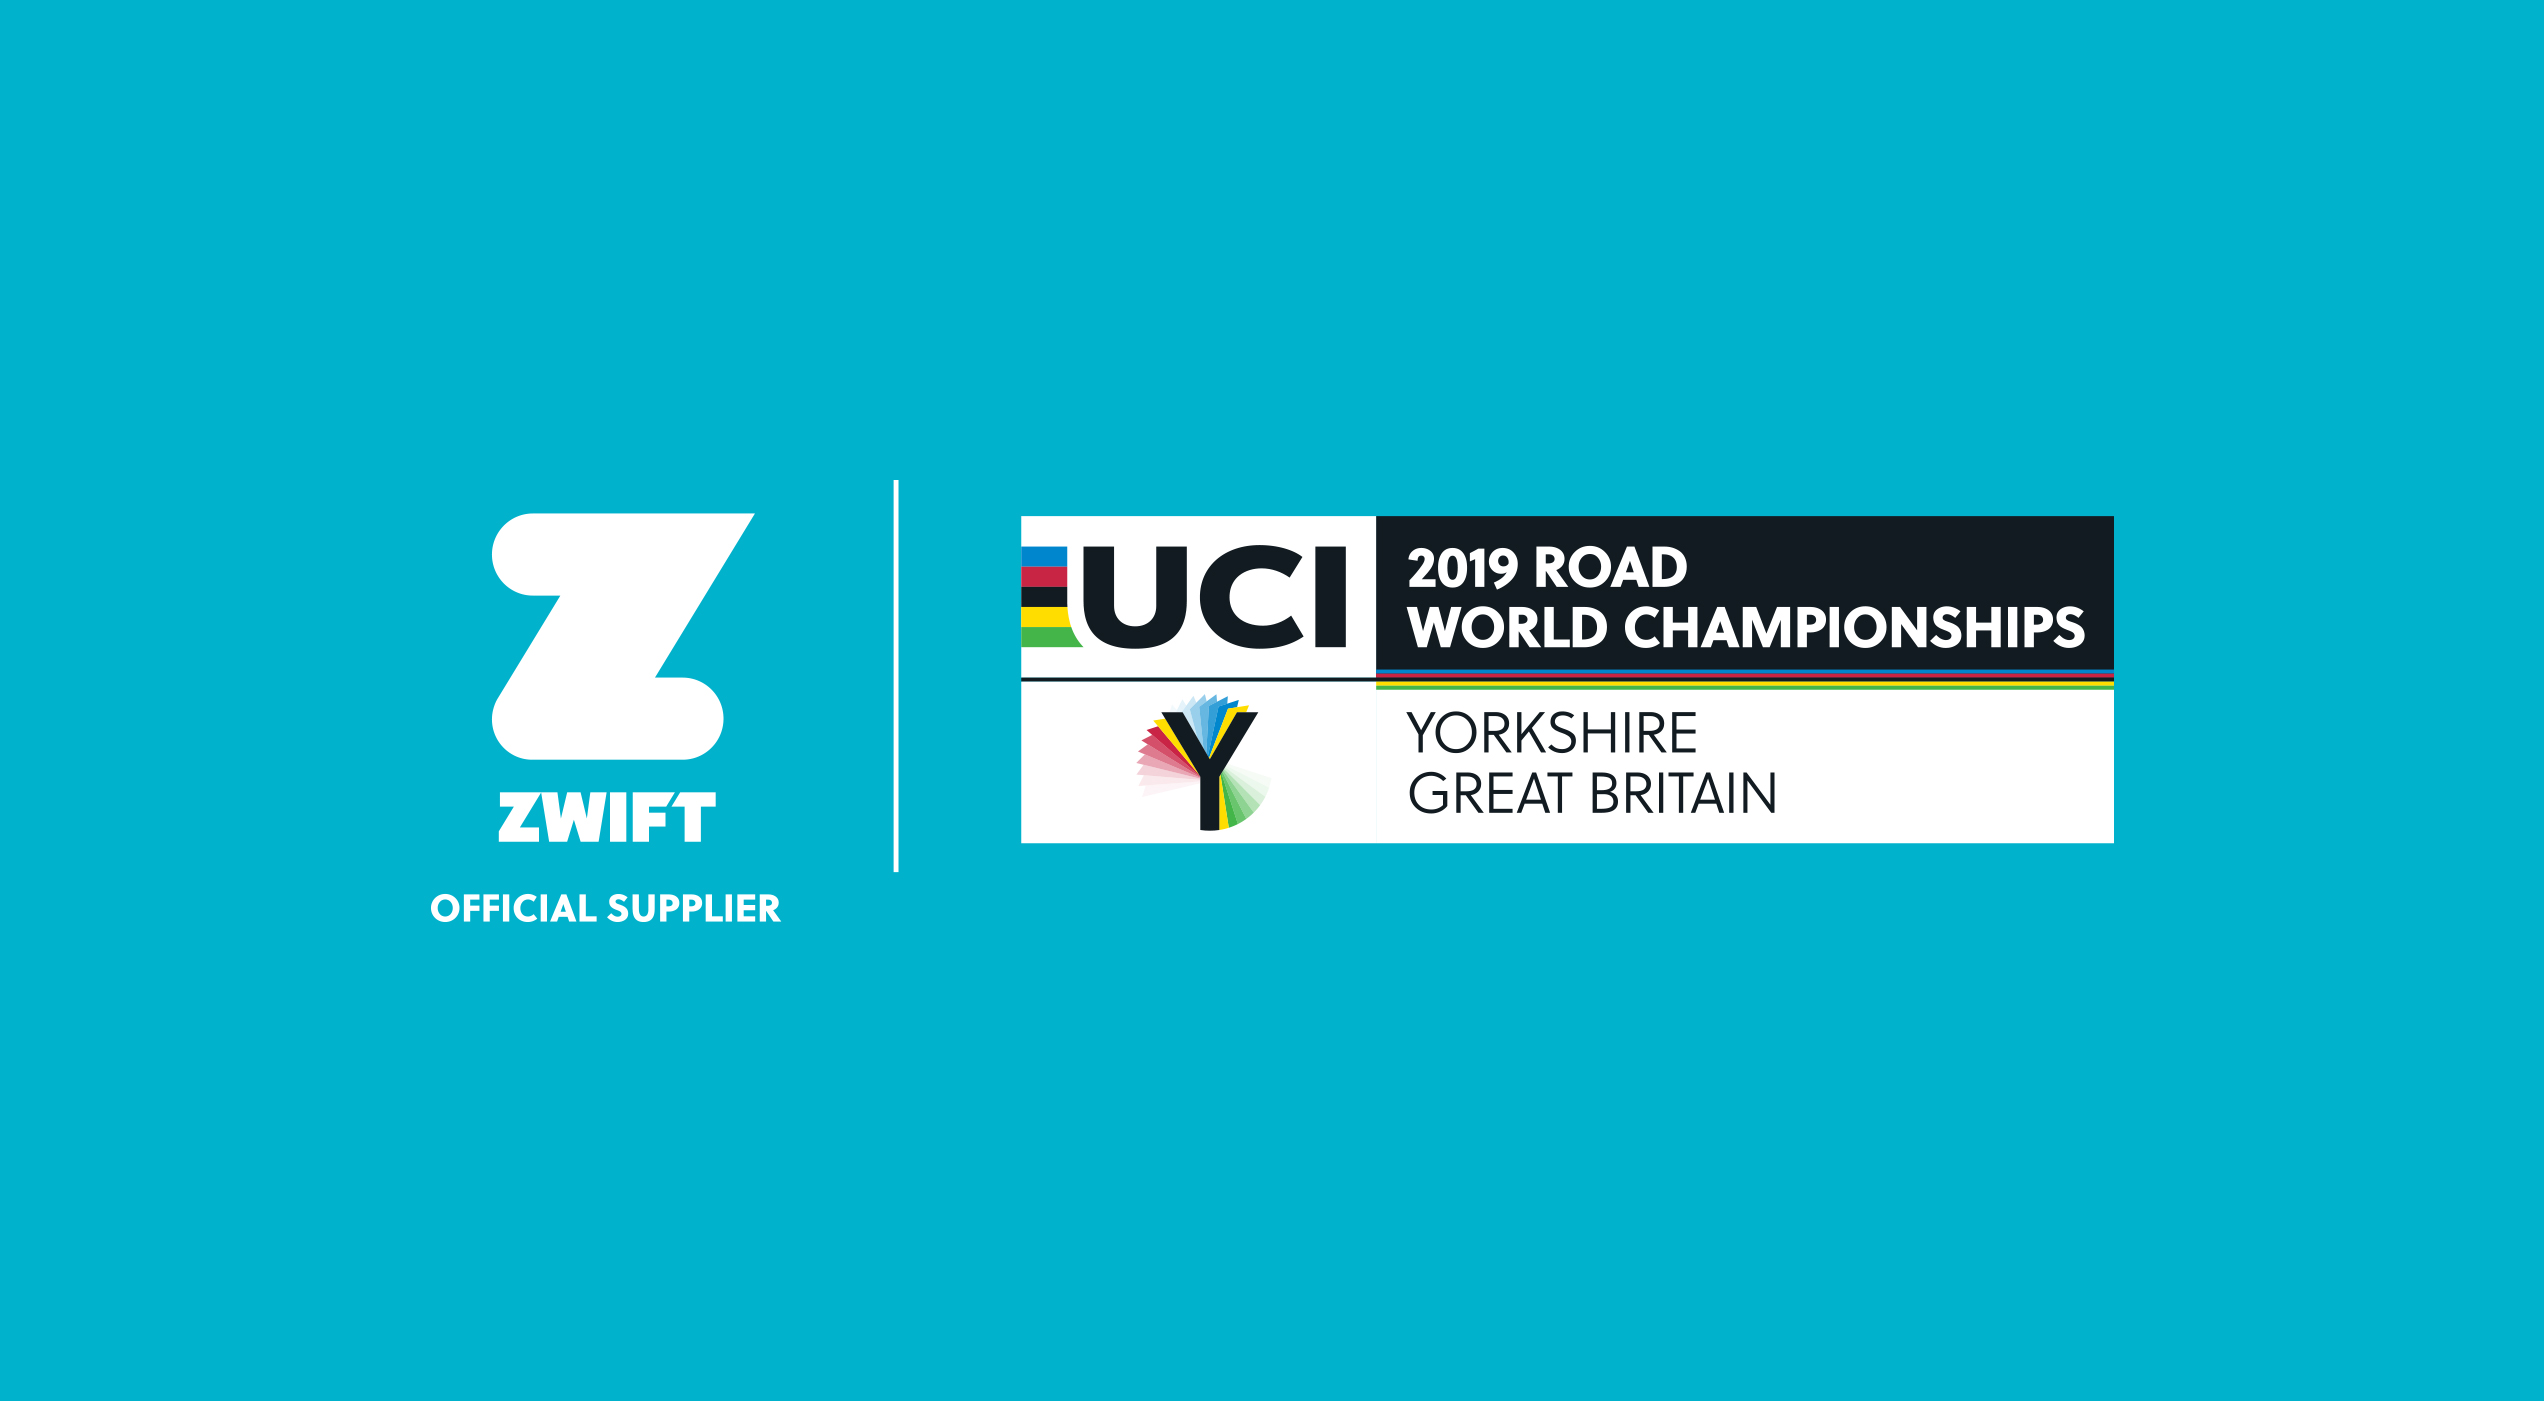 Zwift-2019-Road-World-Championships-Yorkshire-Great-Britain-1.jpg